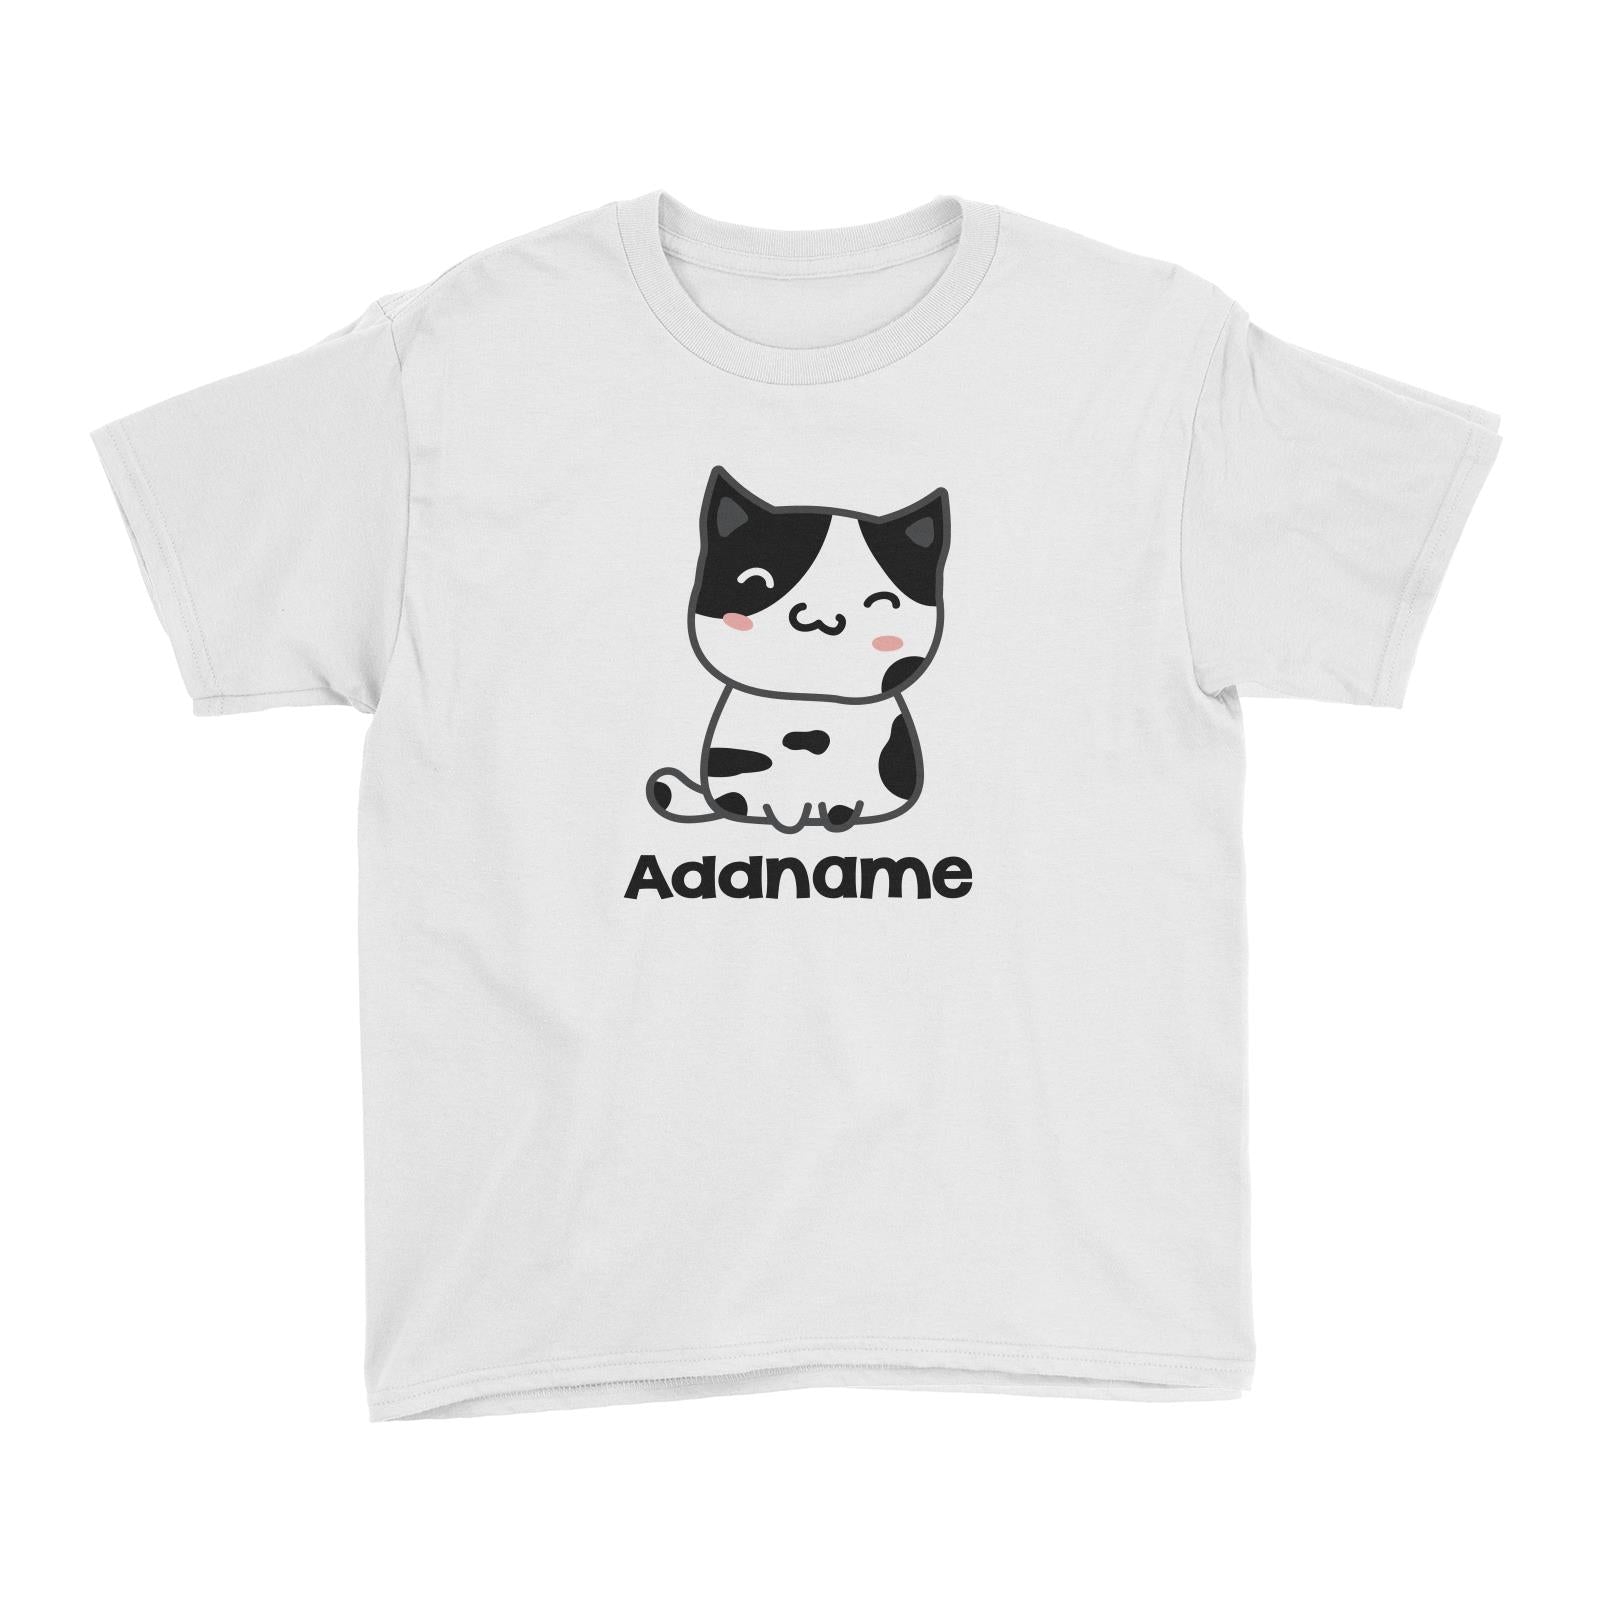 Drawn Adorable Cats Black & White Addname Kid's T-Shirt